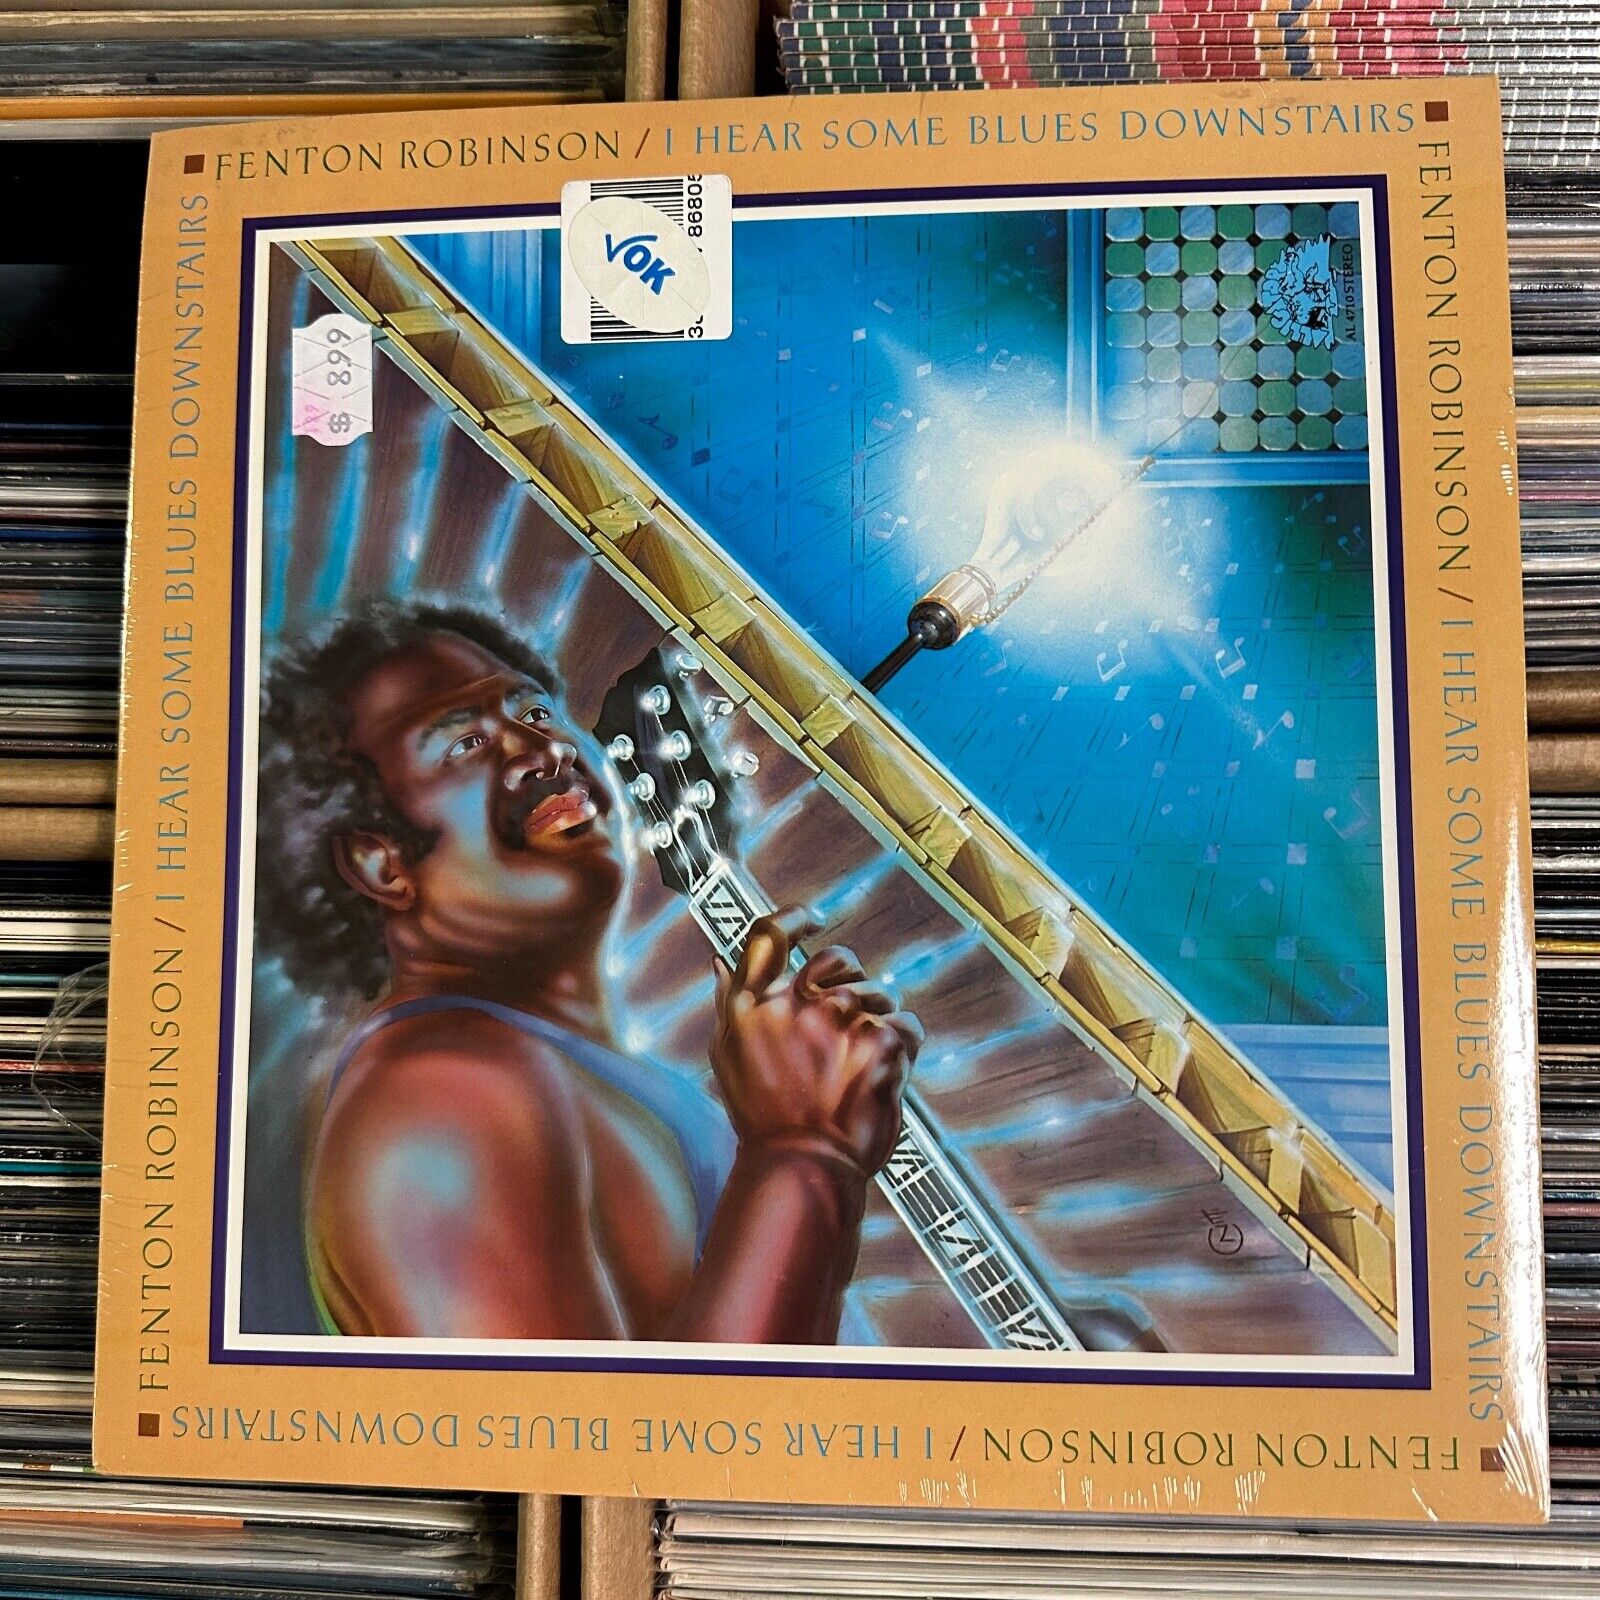 Hear Some Blues Downstairs LP Record Album Vinyl Sealed Fenton Robinson Blues